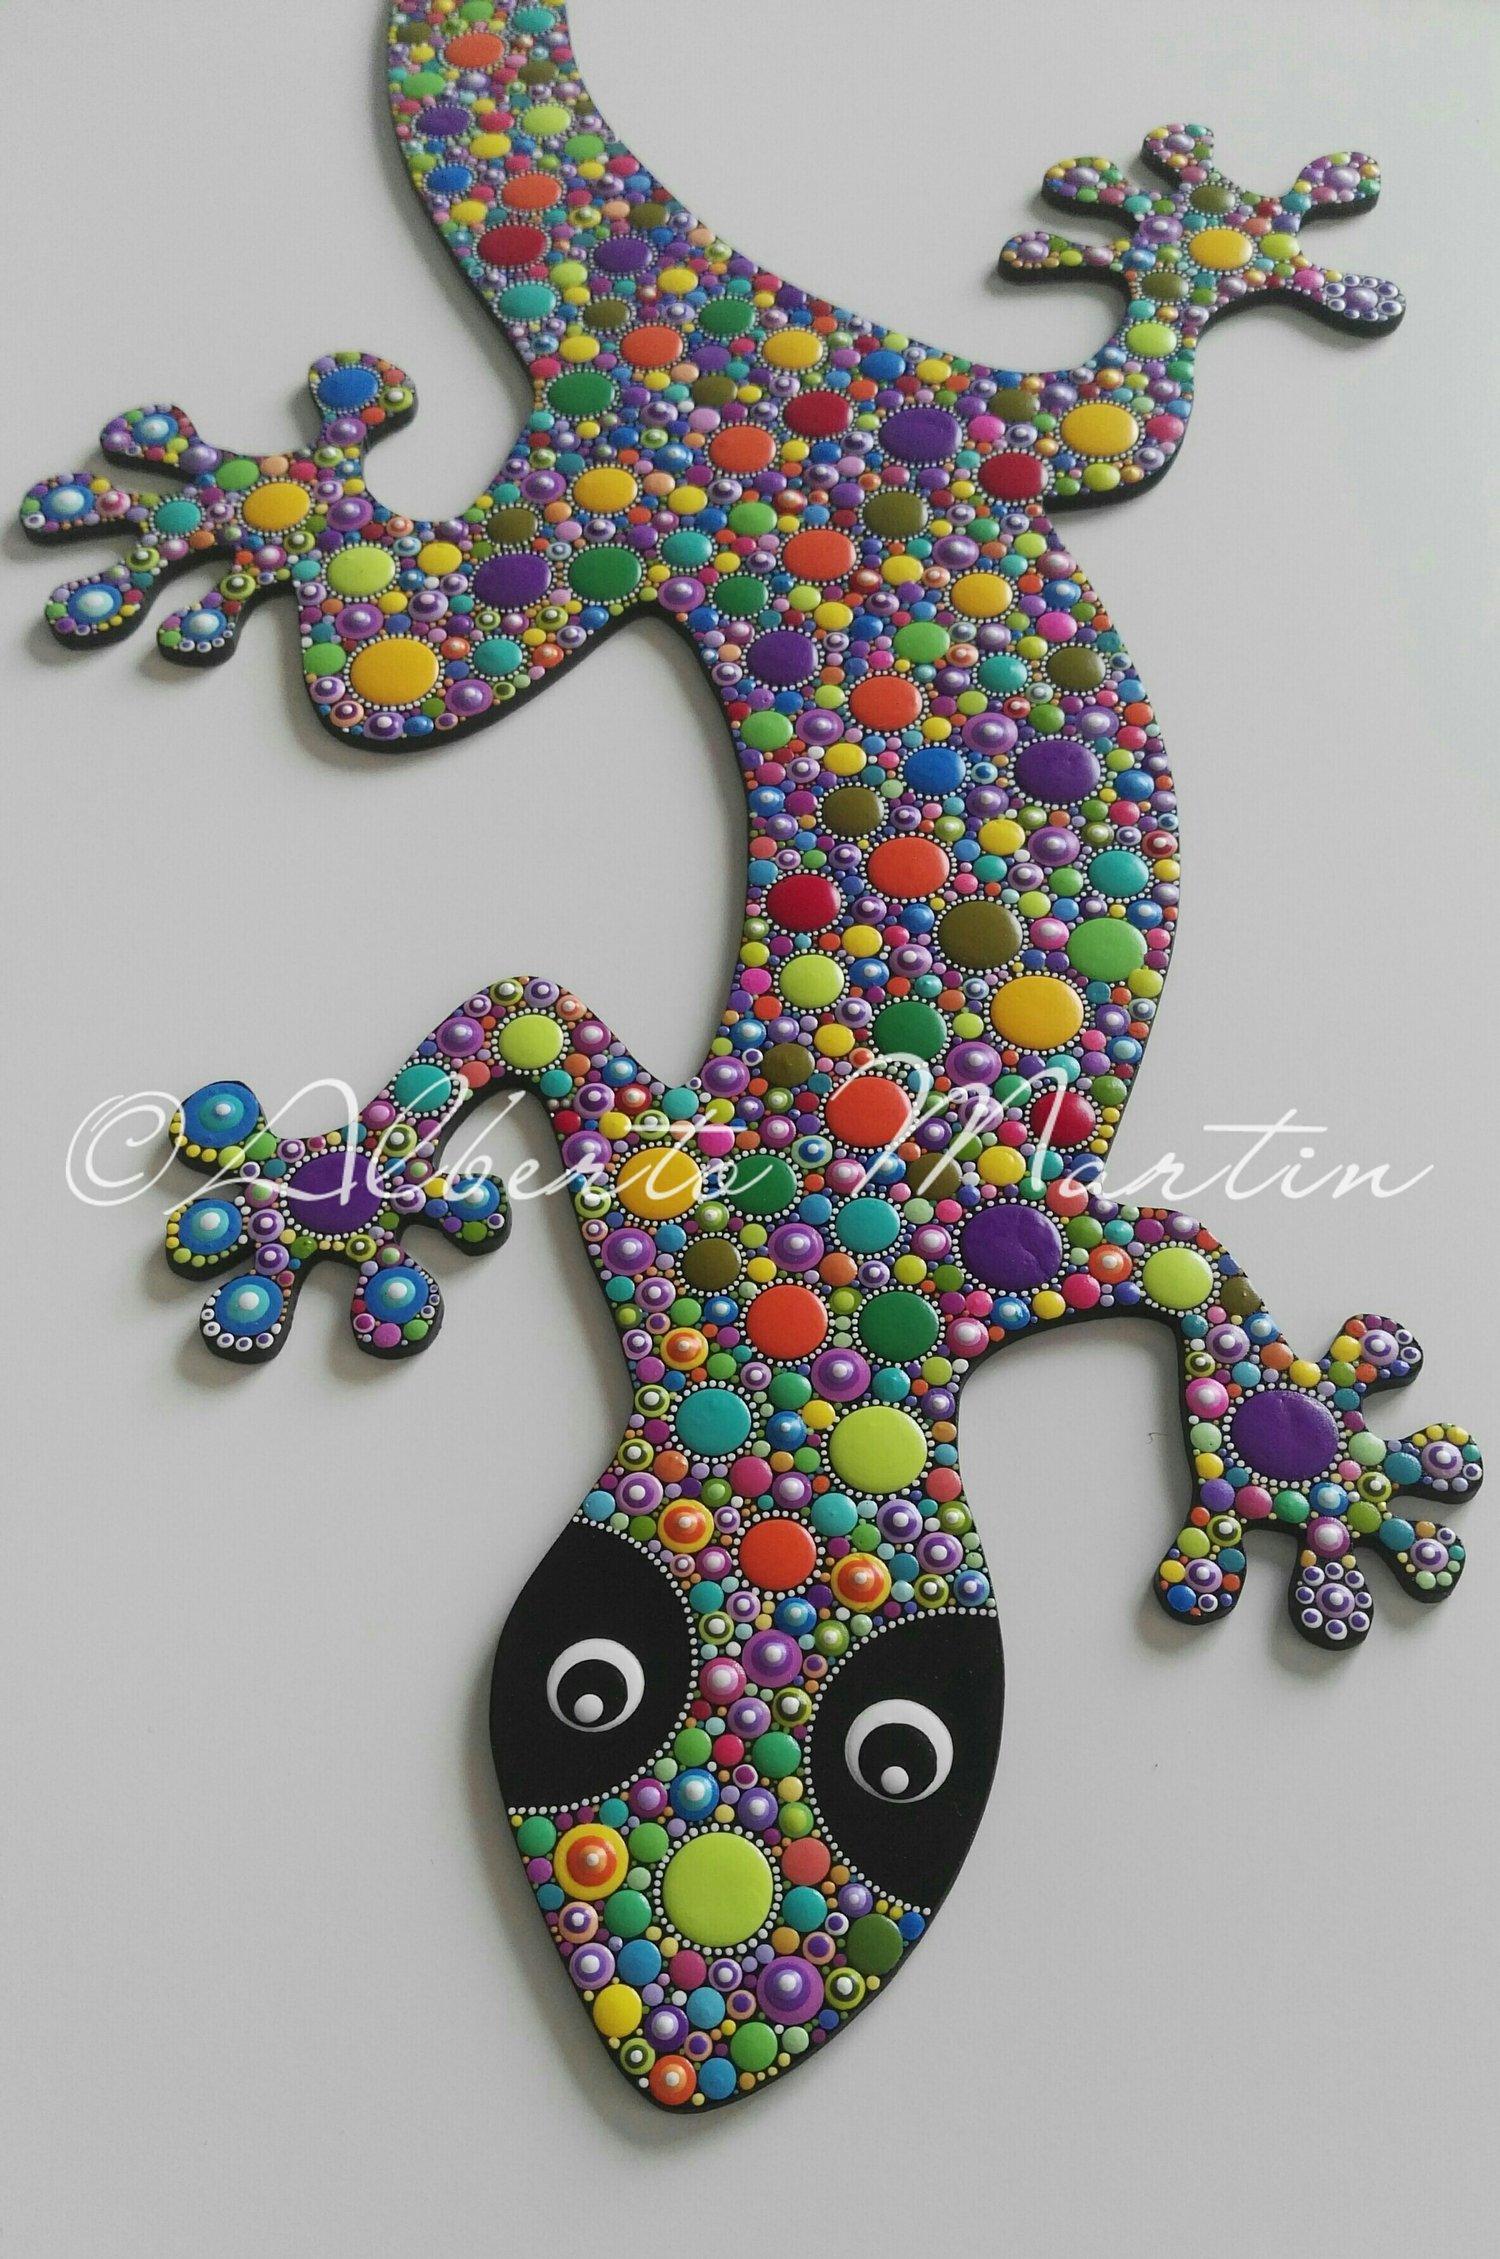 Image of Lizard - Gecko 10/ dot art mdf/ handpainted/ Gift ideas/ by Alberto Martin